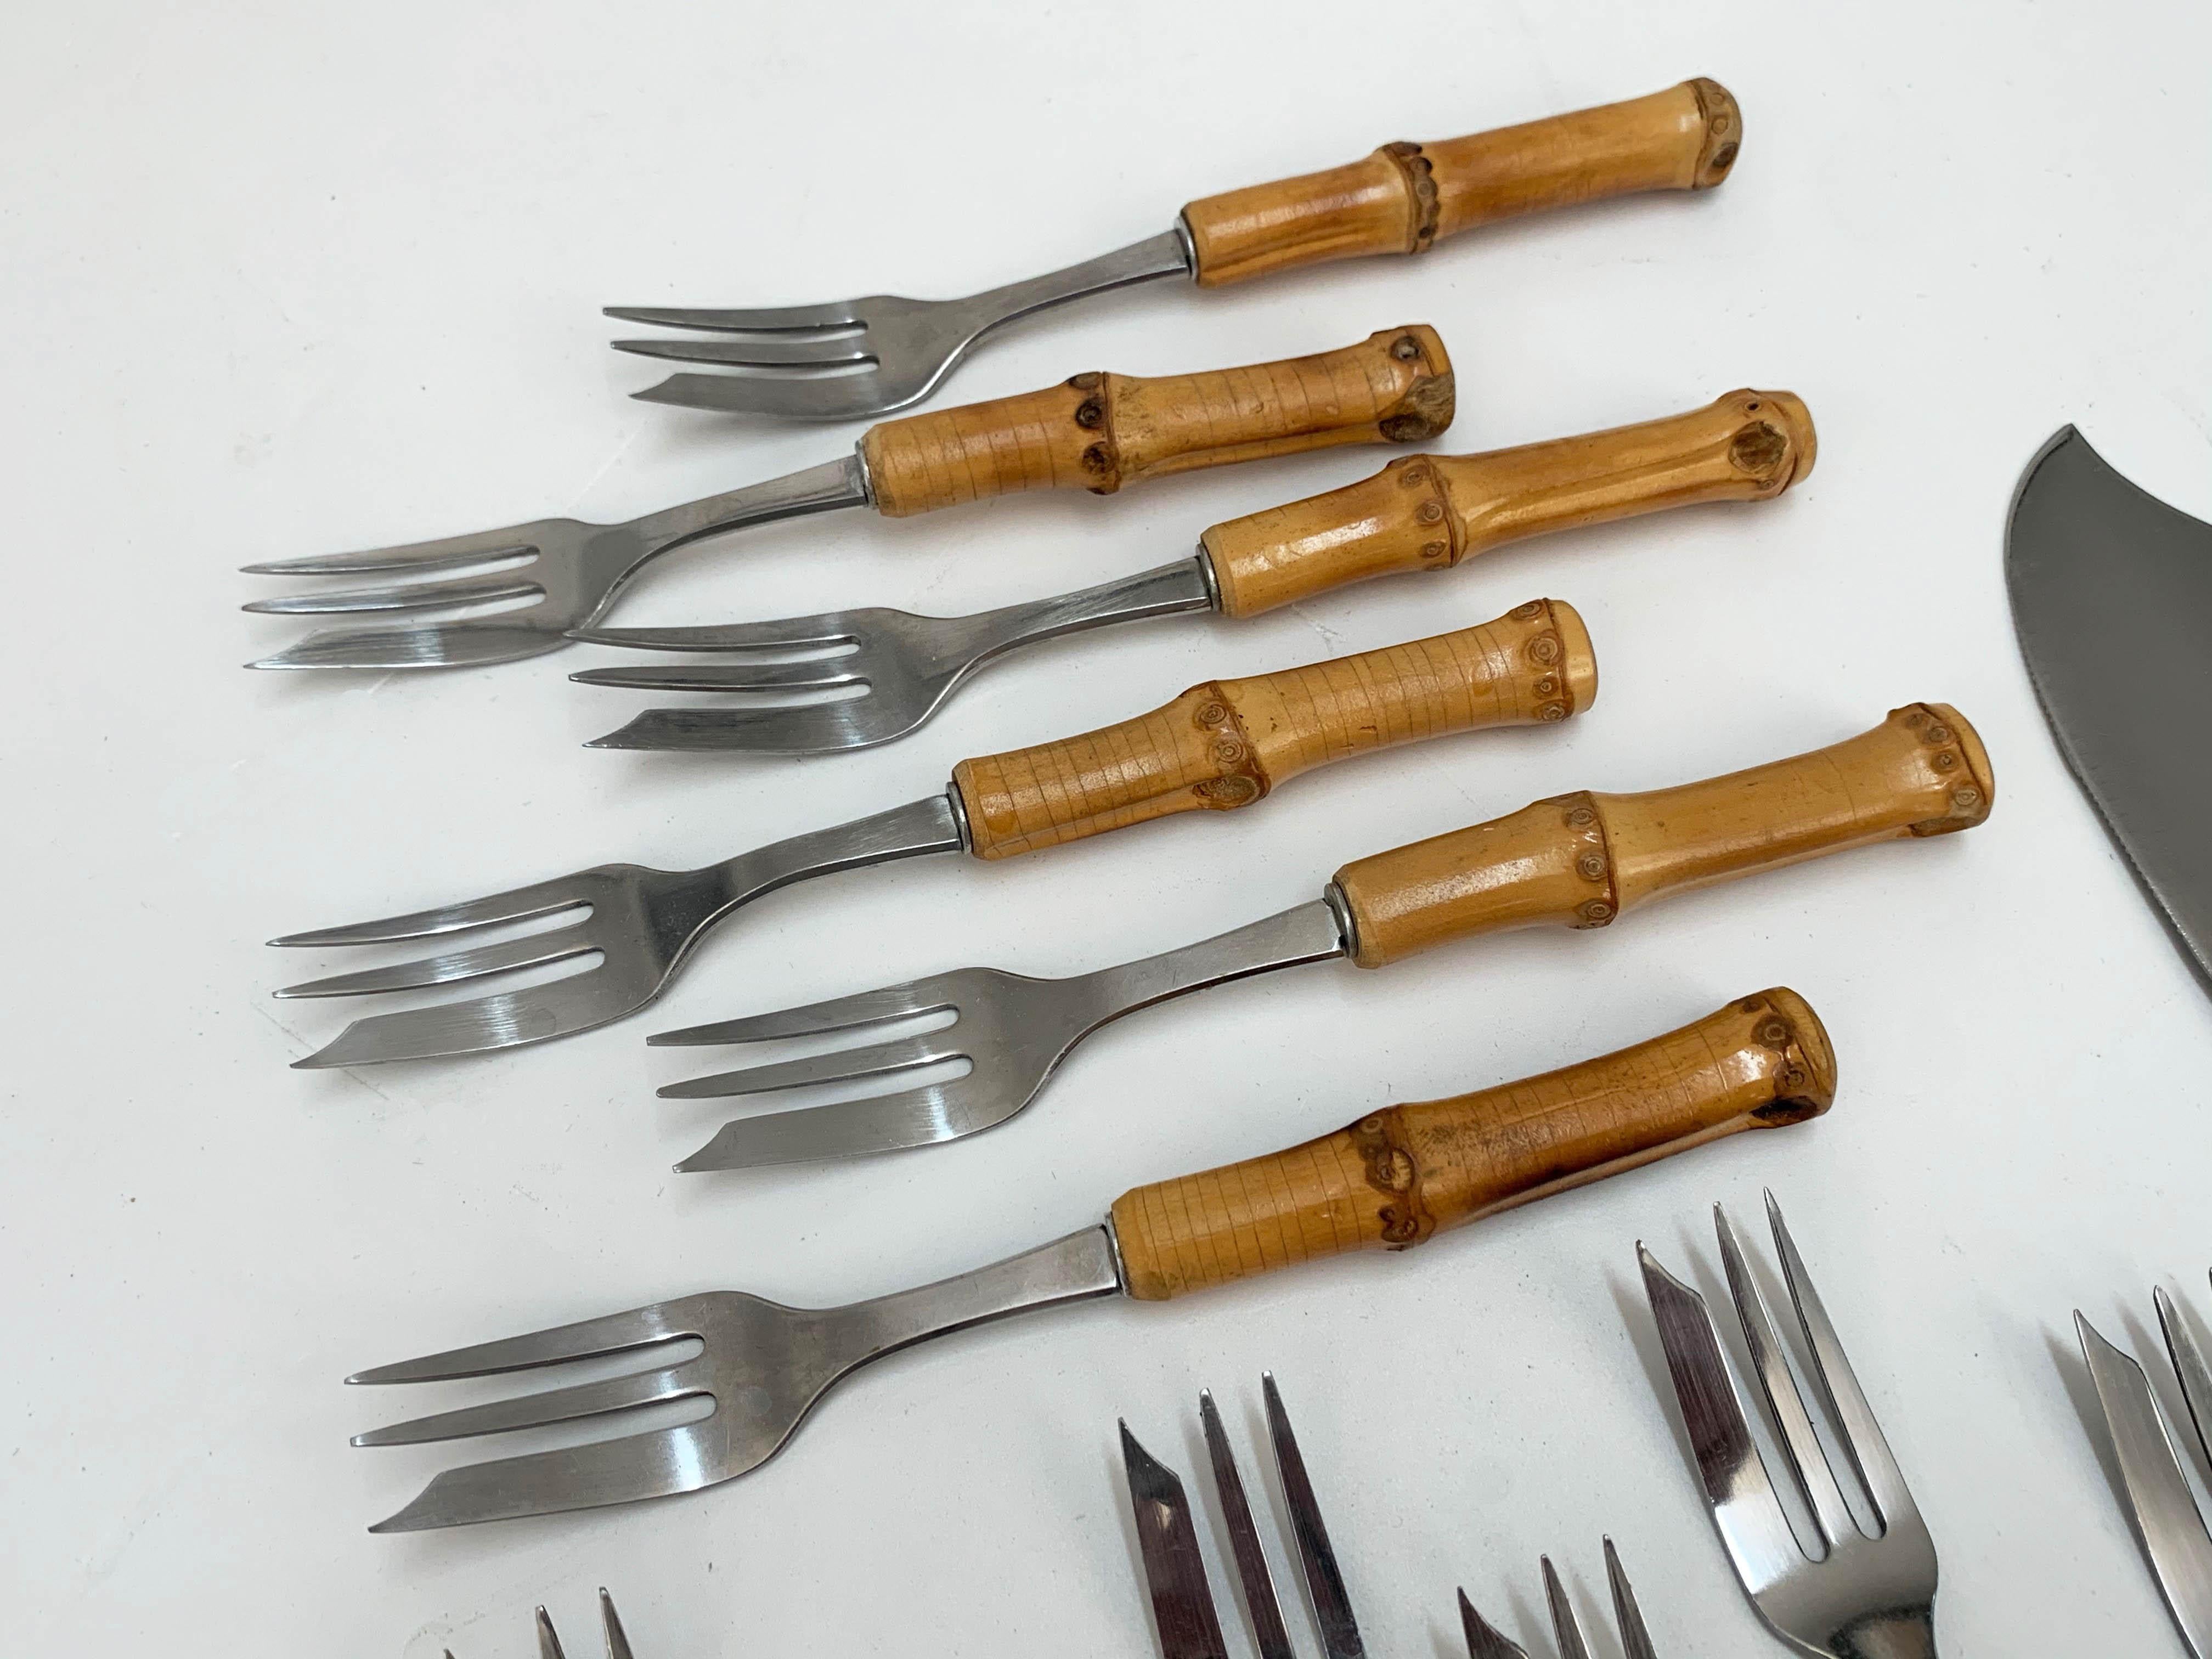 rostfrei cutlery set